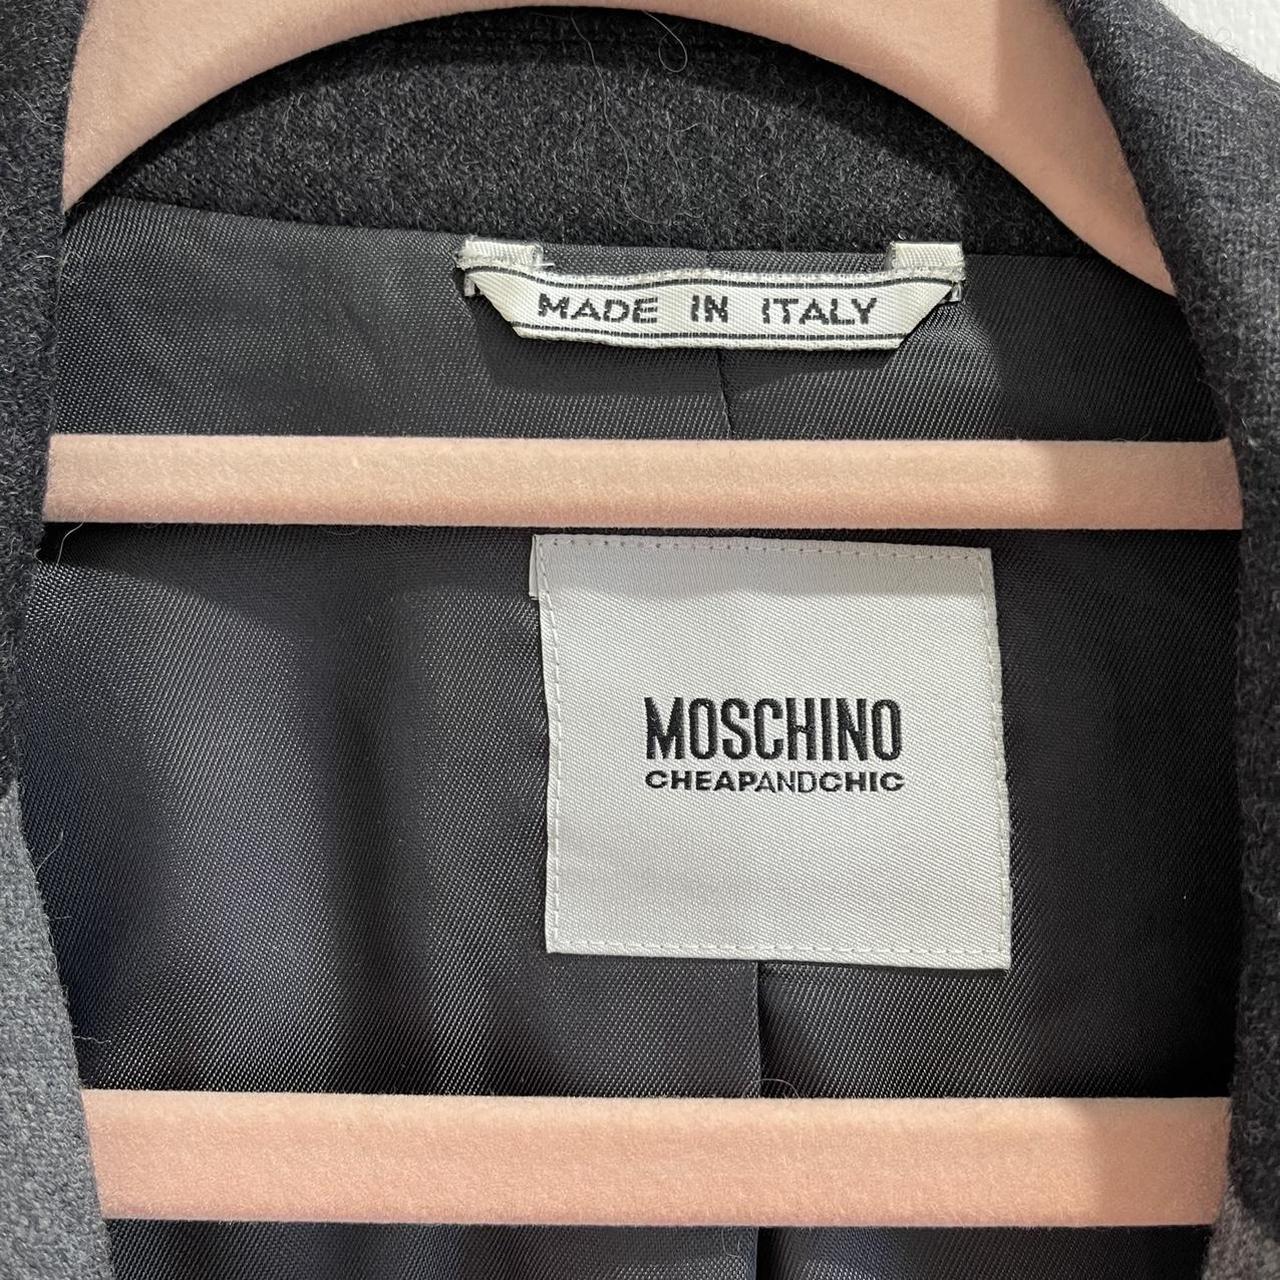 Moschino Cheap & Chic Women's Grey and Black Jacket (2)